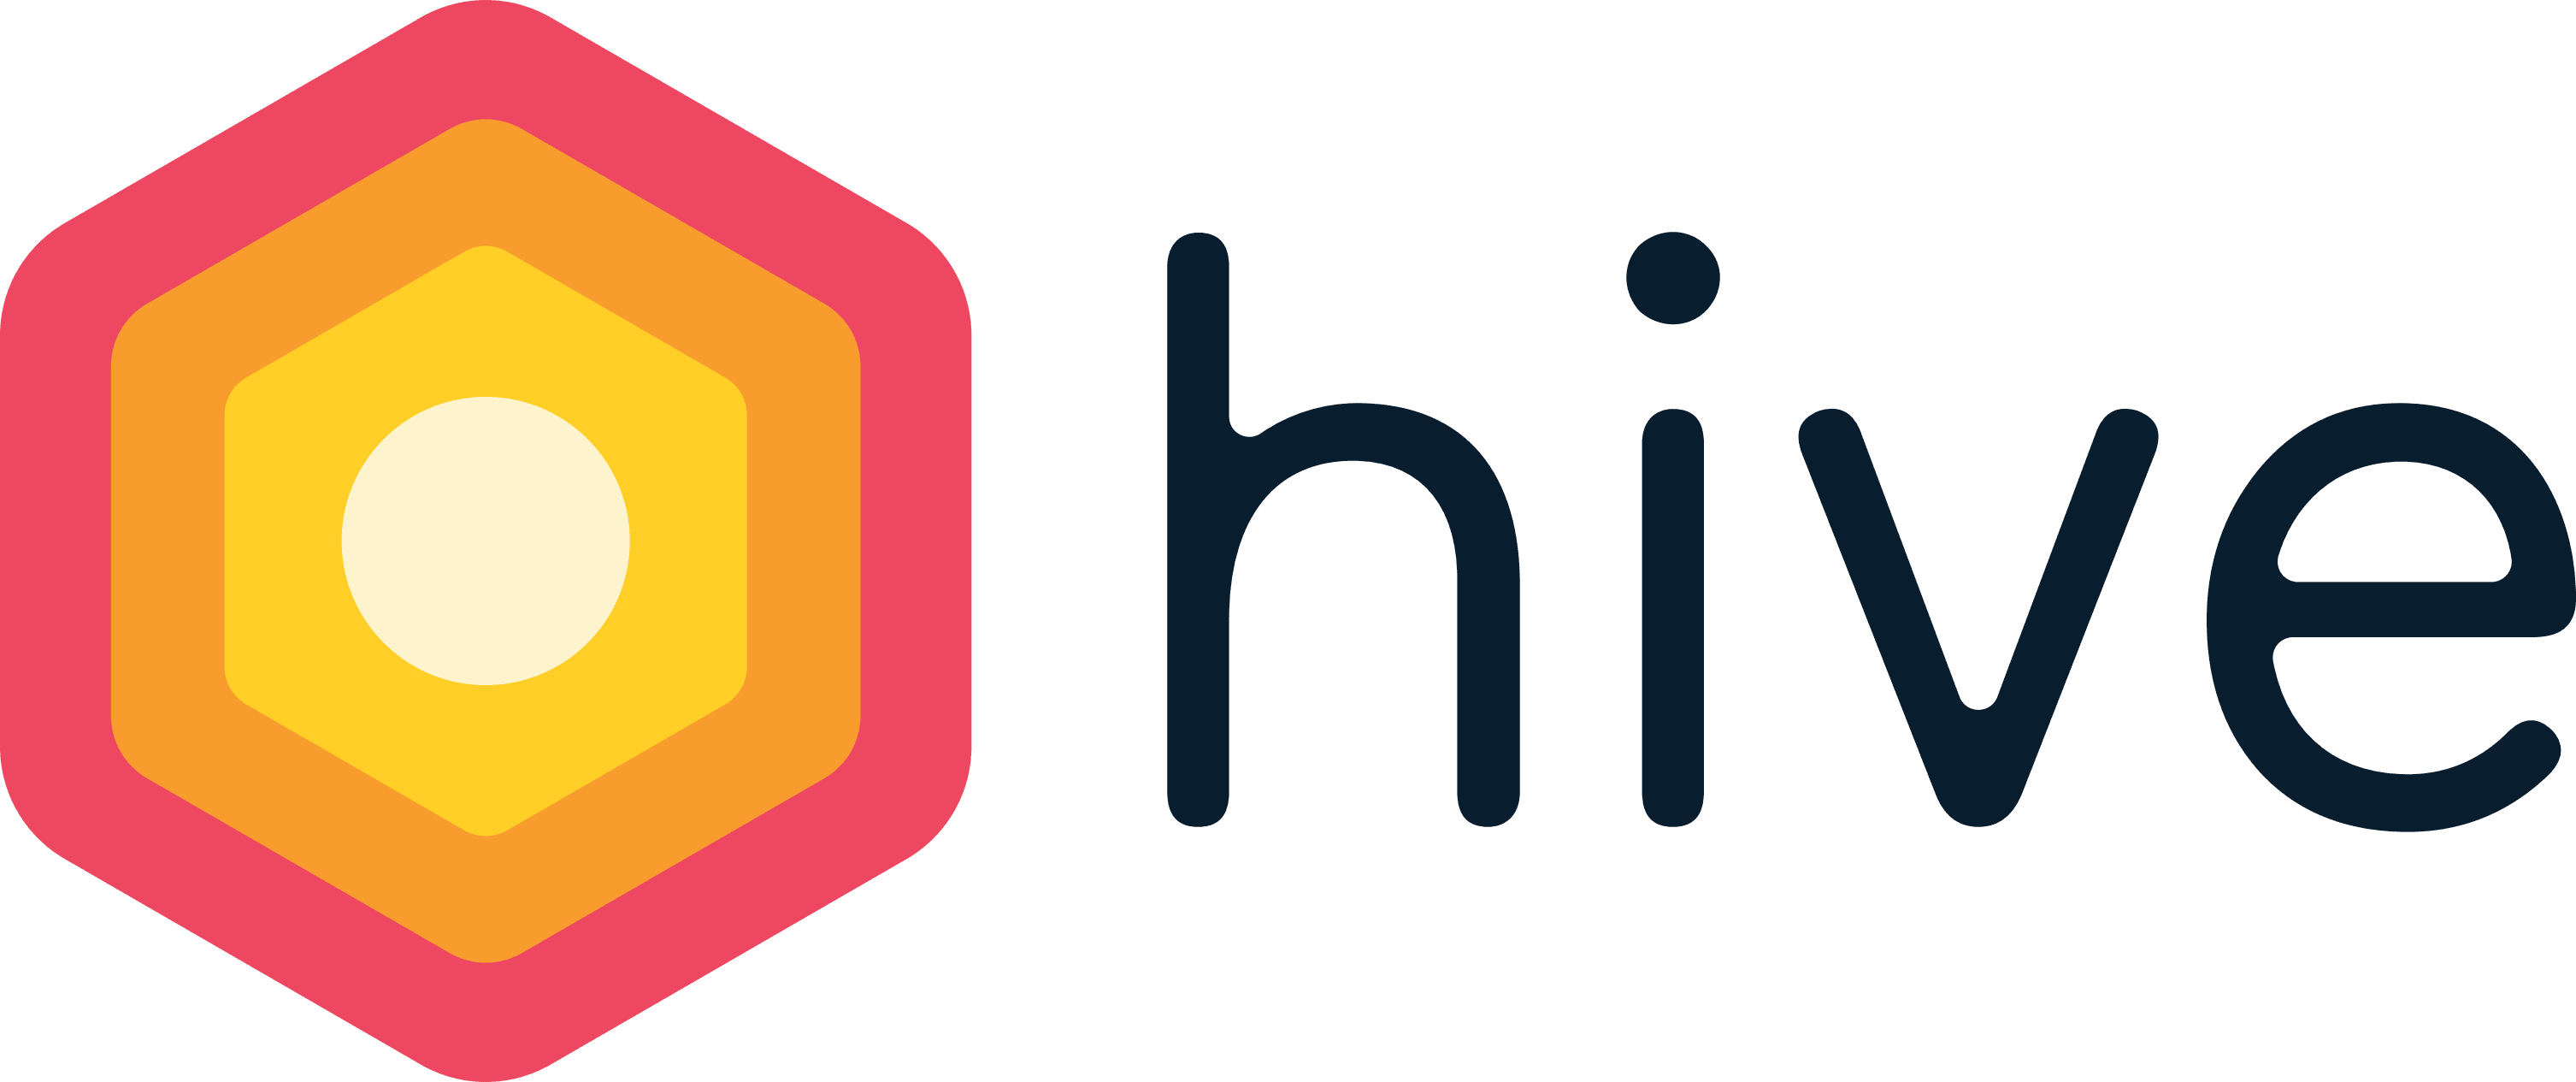 Hive HR